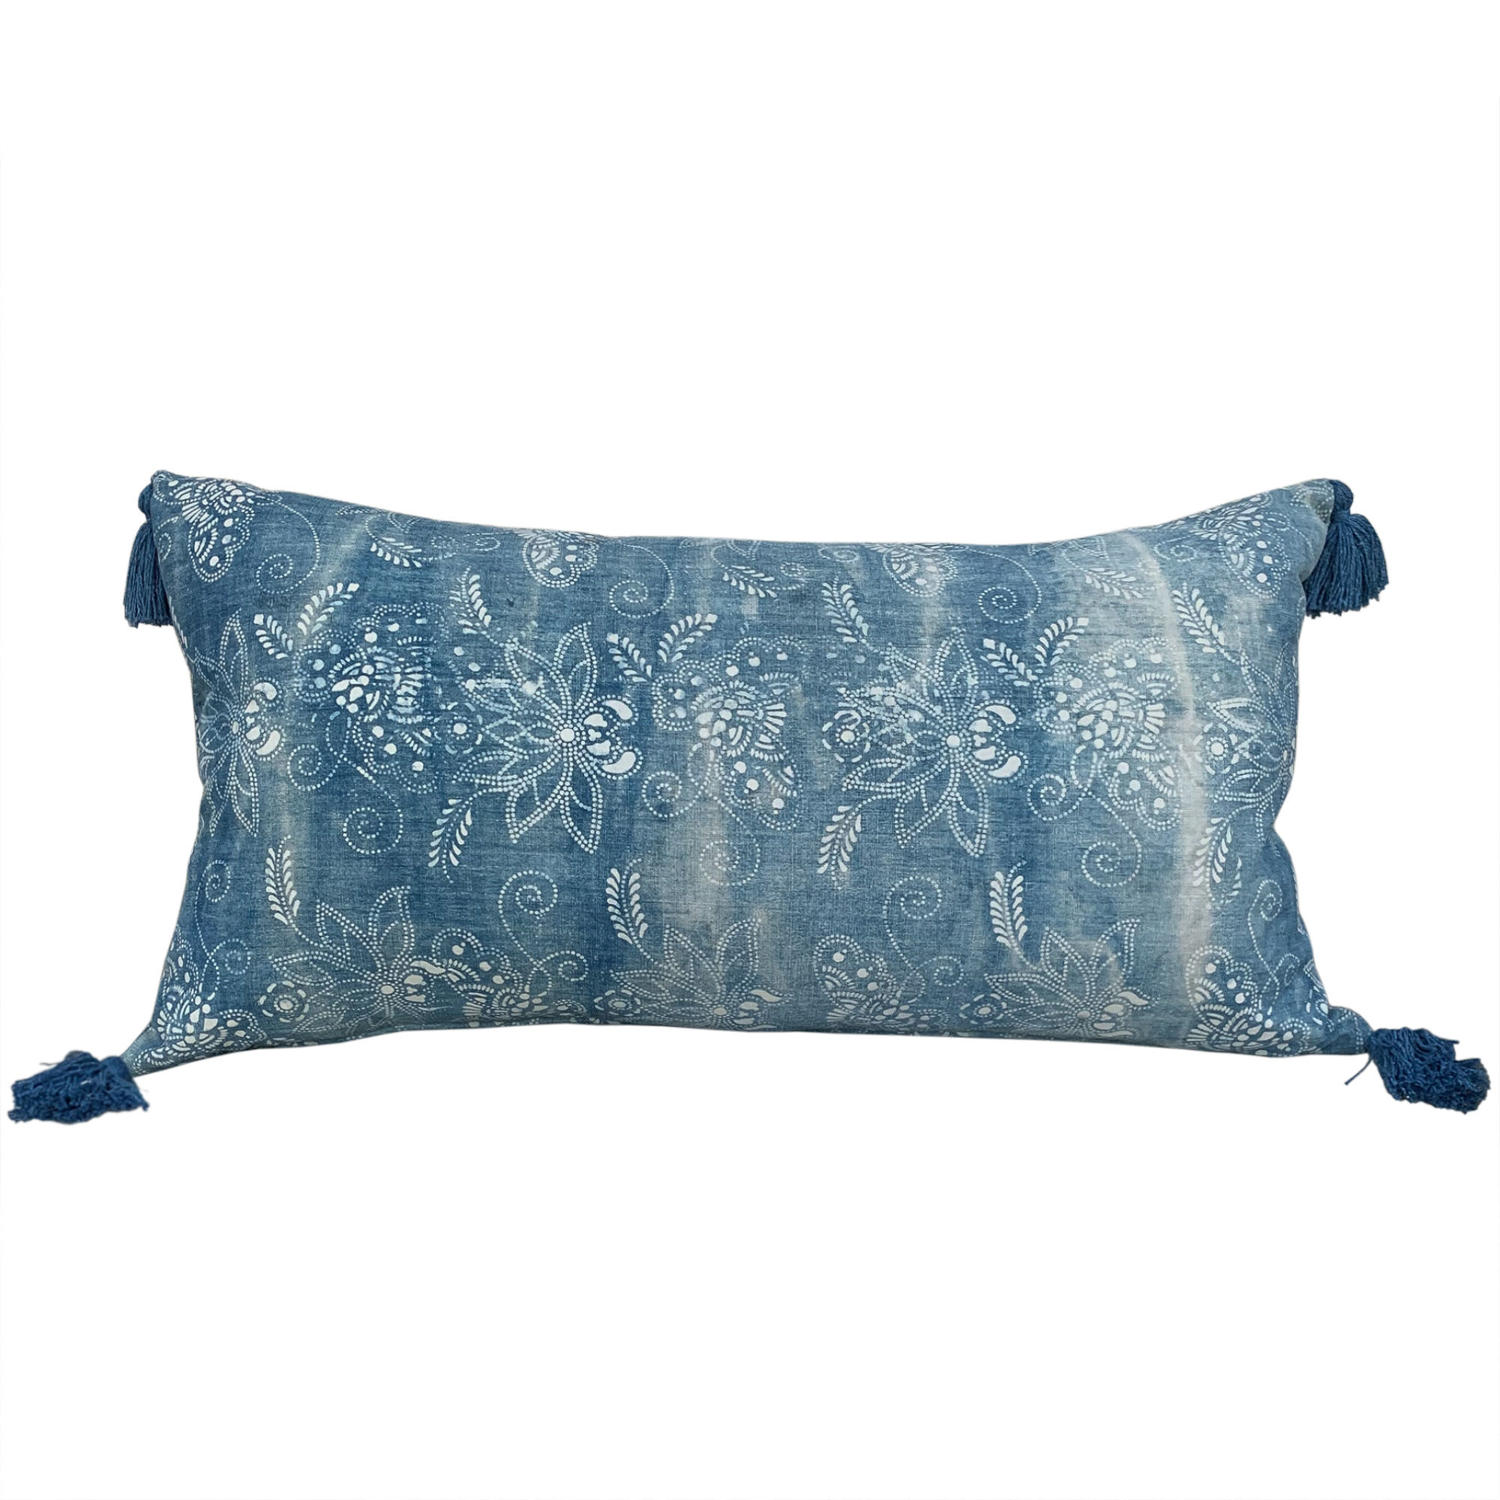 Long indigo resist cushions with tassels